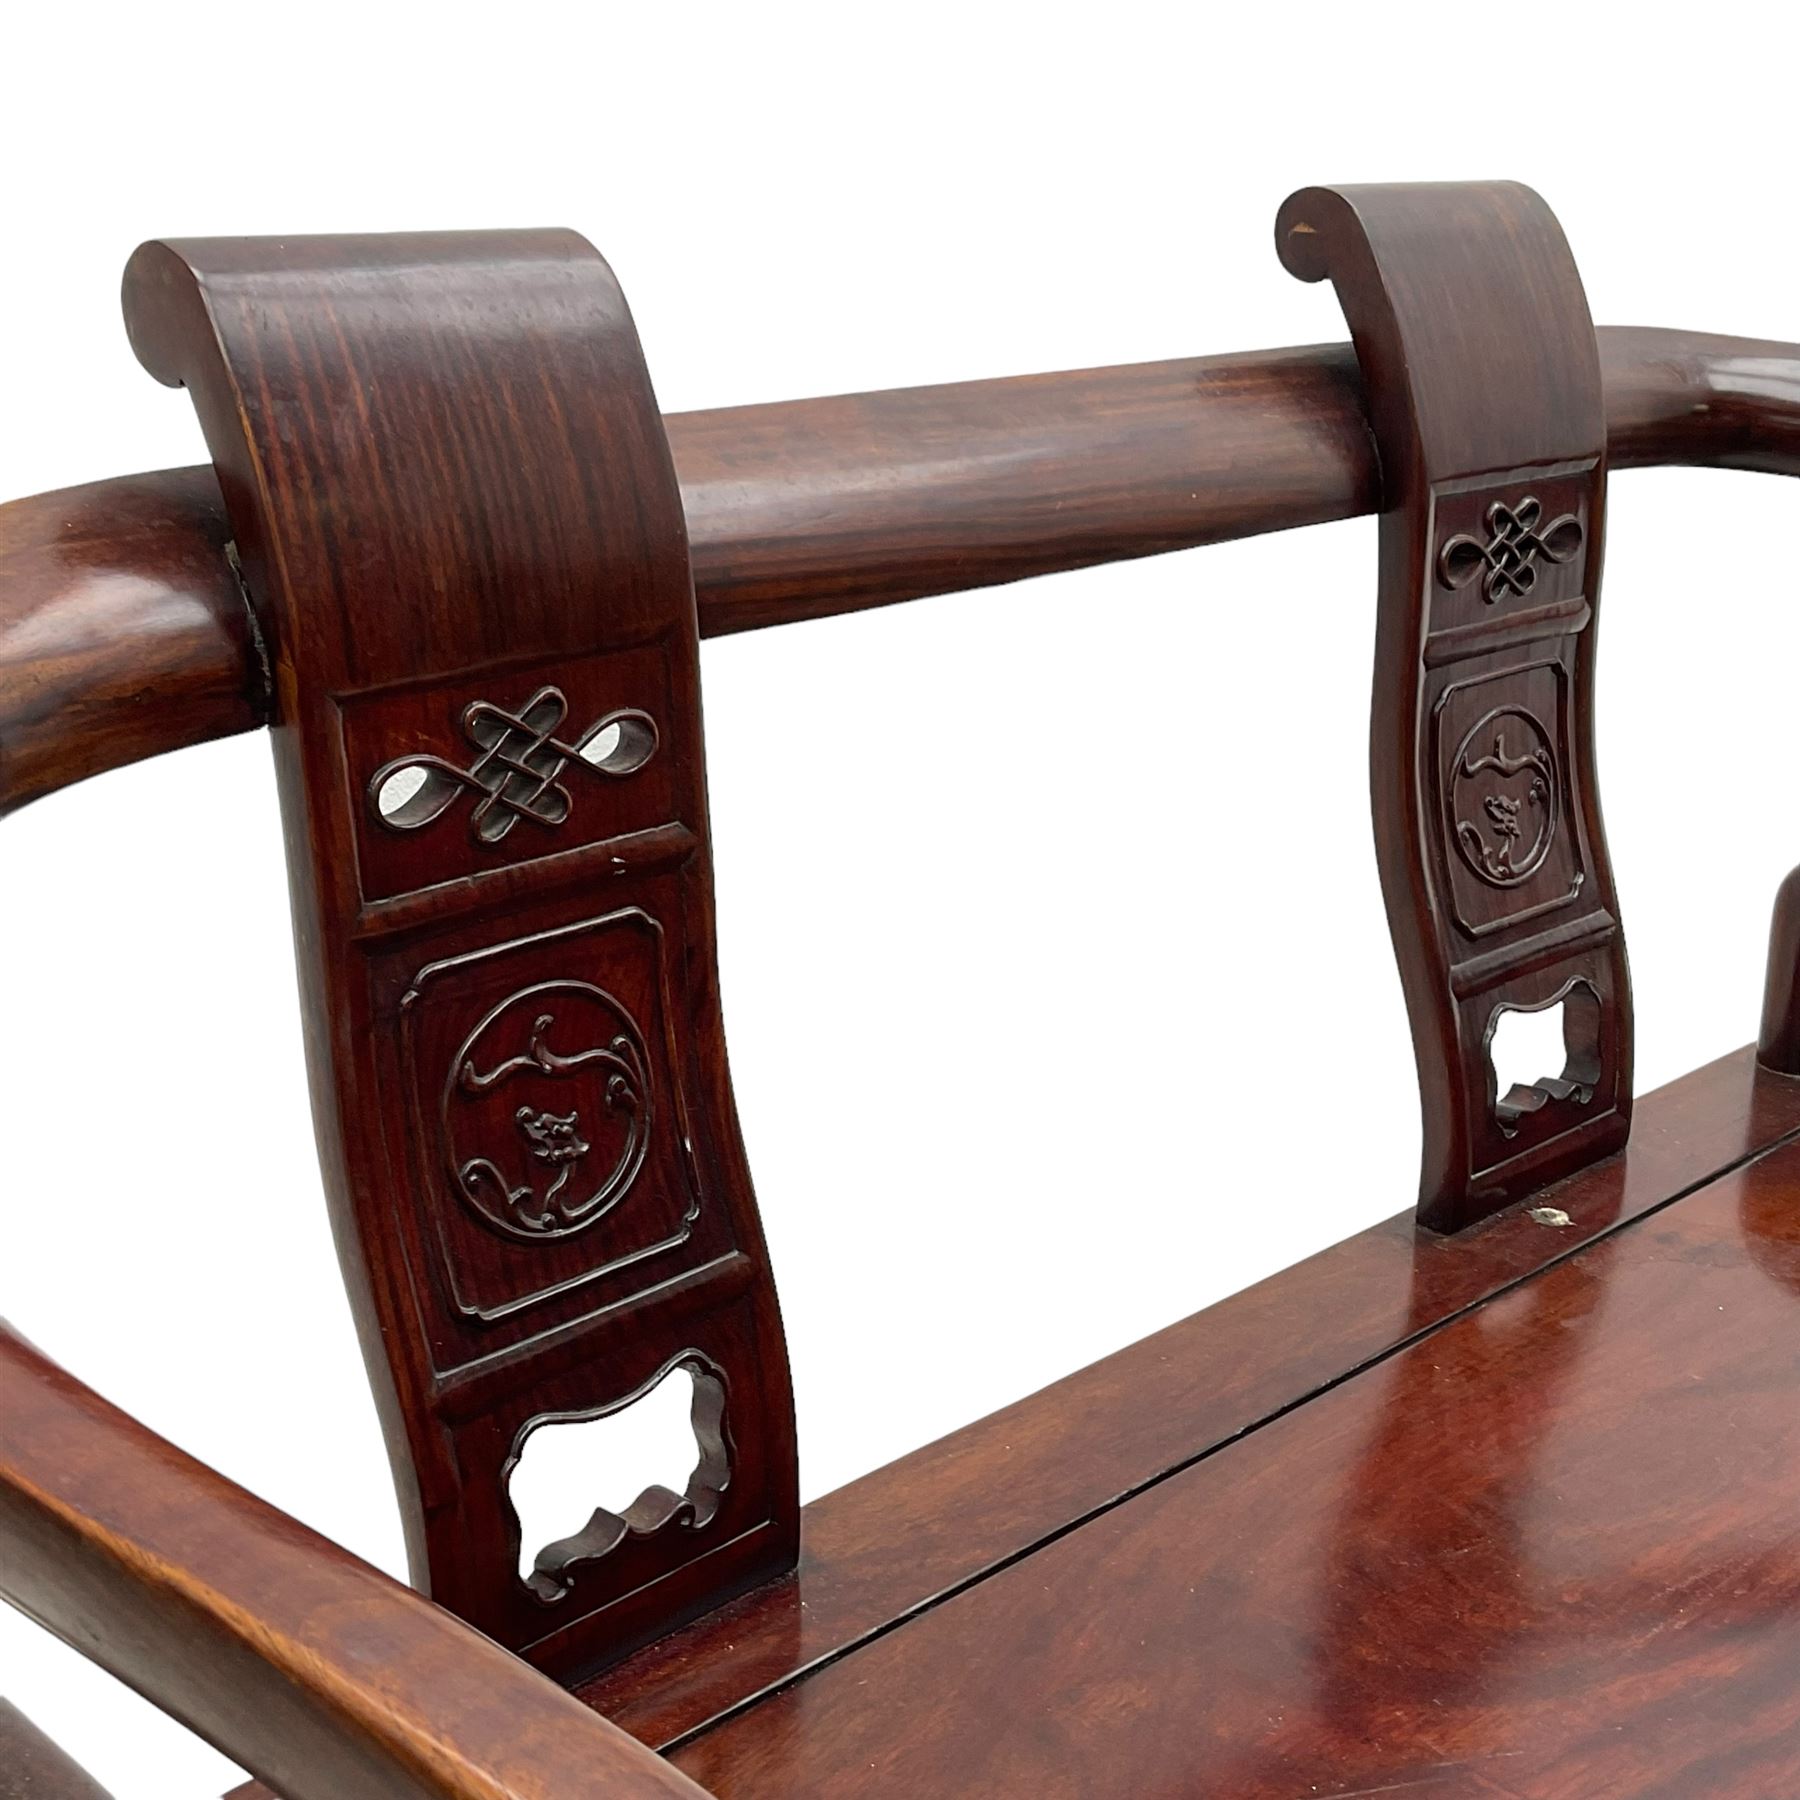 20th century Chinese hardwood two-seat bench - Image 3 of 6